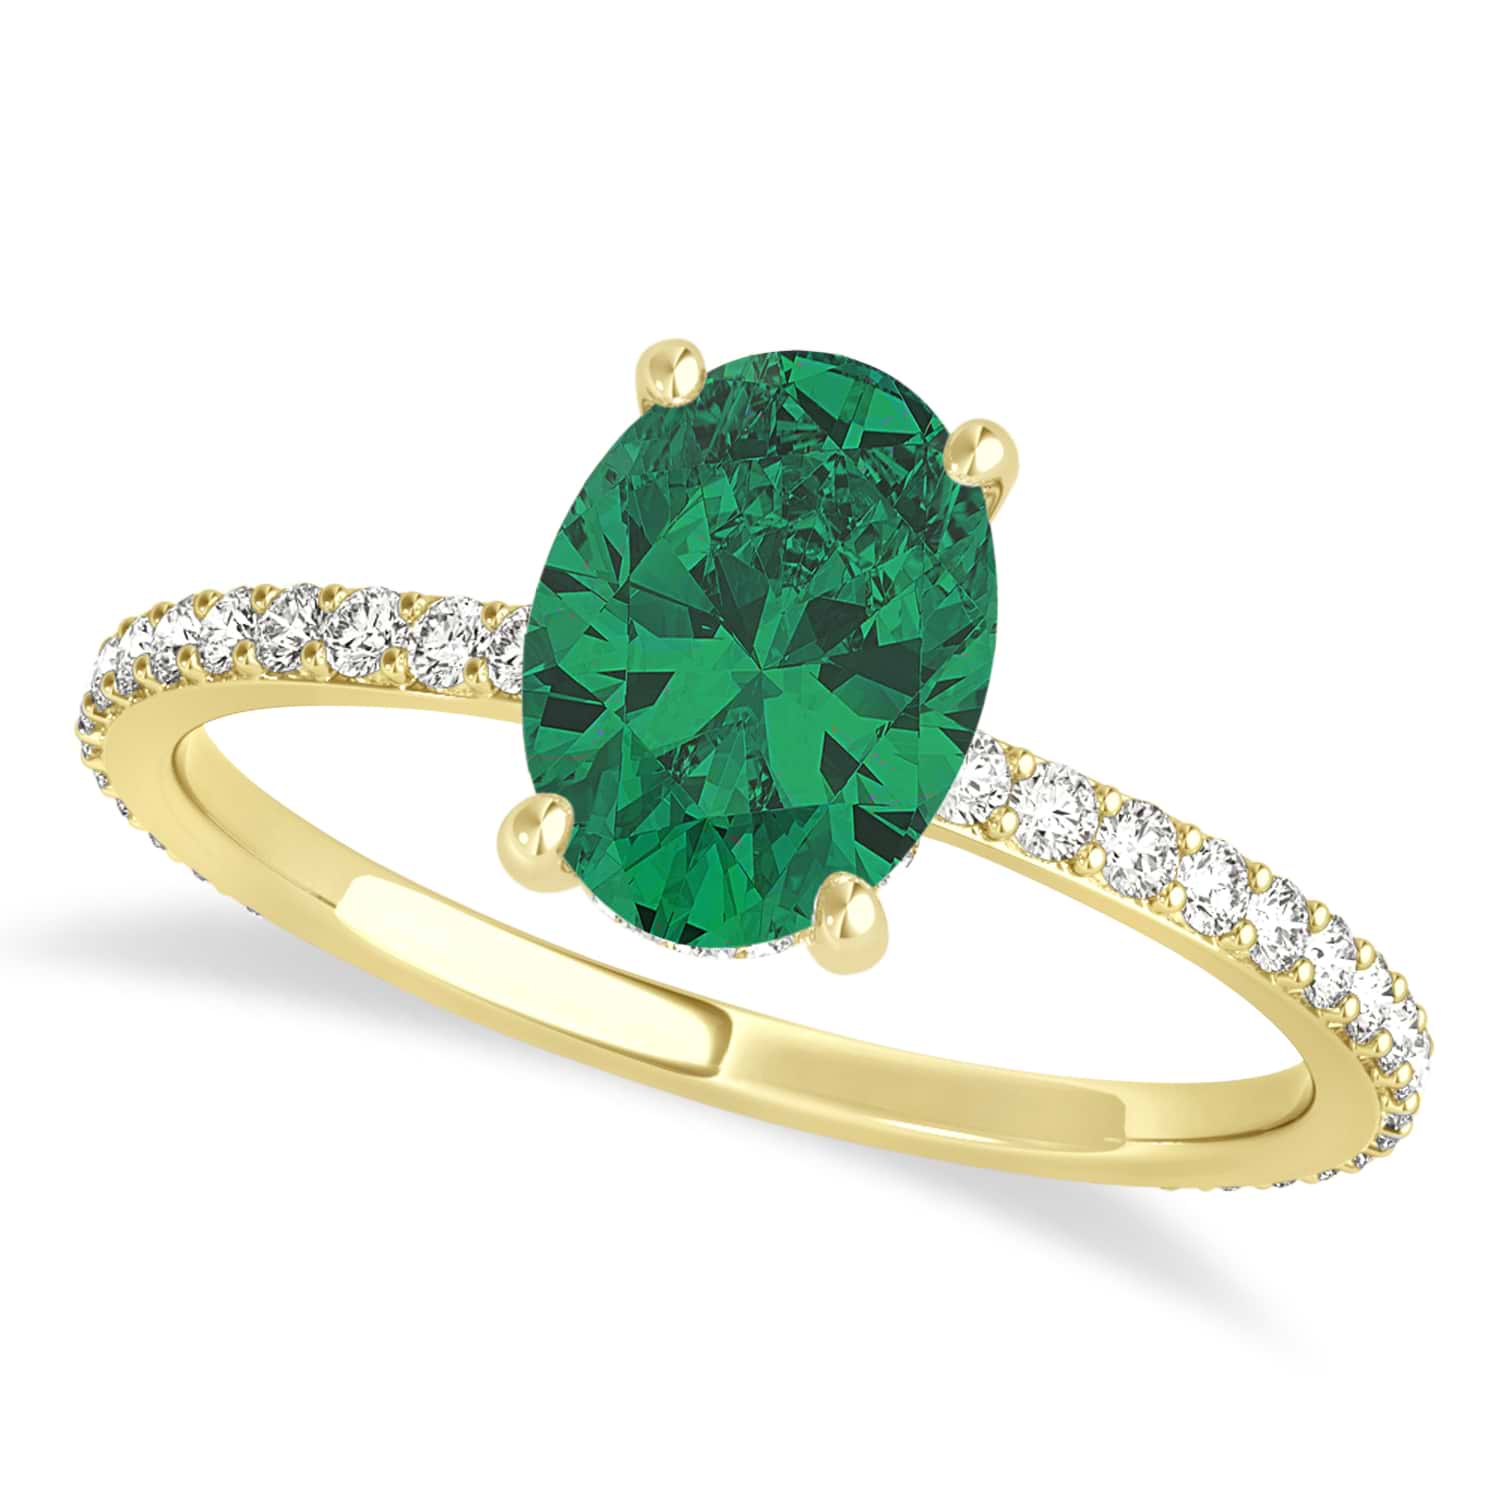 Oval Emerald & Diamond Hidden Halo Engagement Ring 14k Yellow Gold (0.76ct)